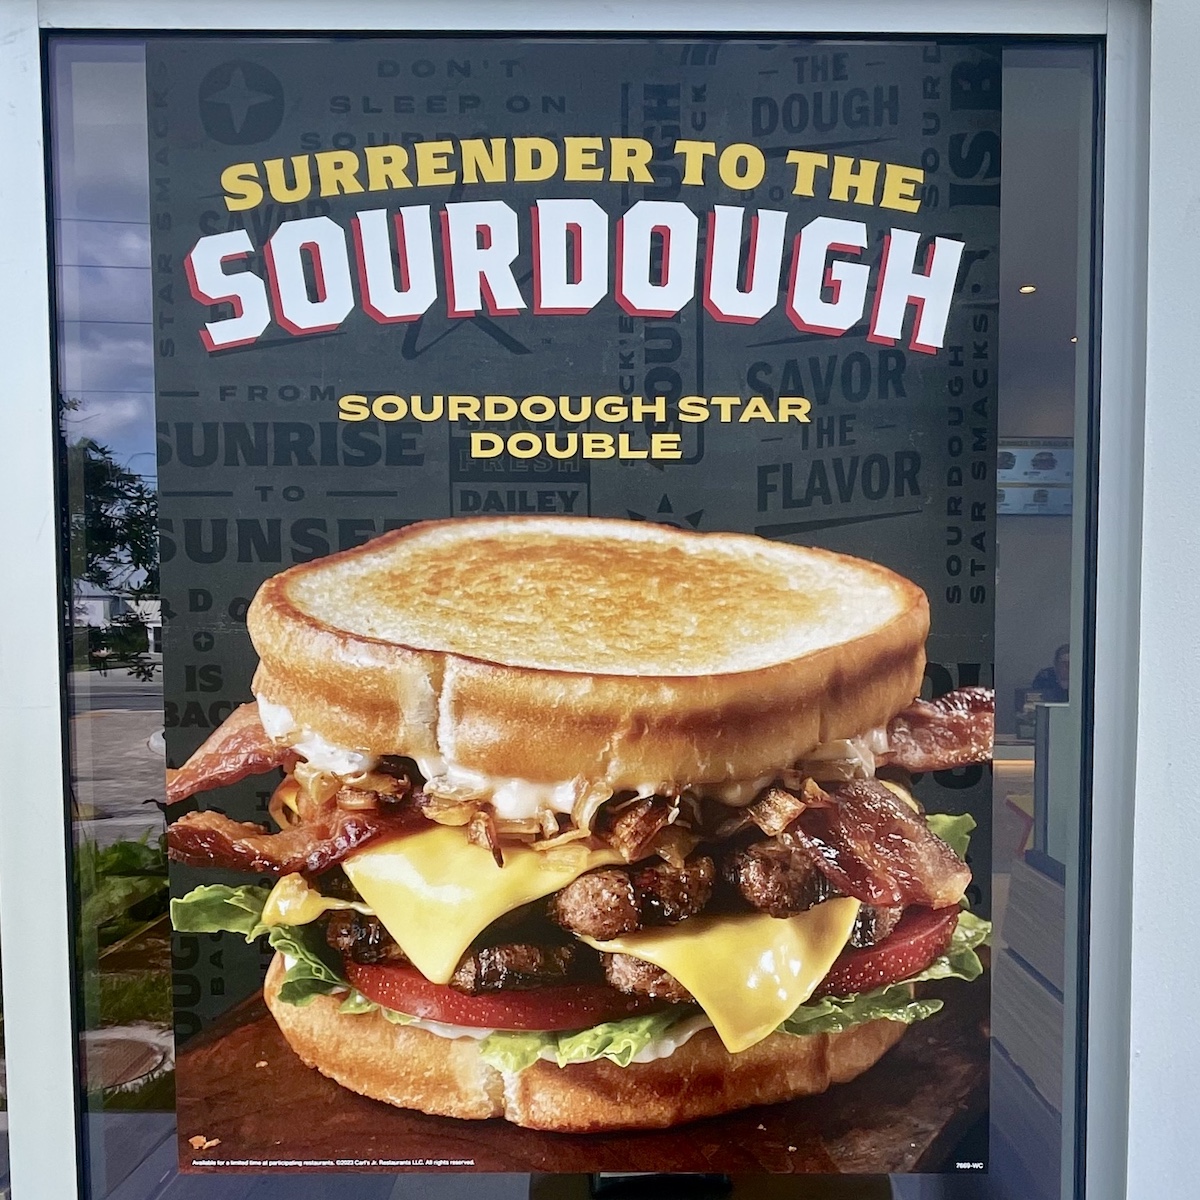 Surrender to the Sourdough Poster at Carl's Jr. in Doral, Florida